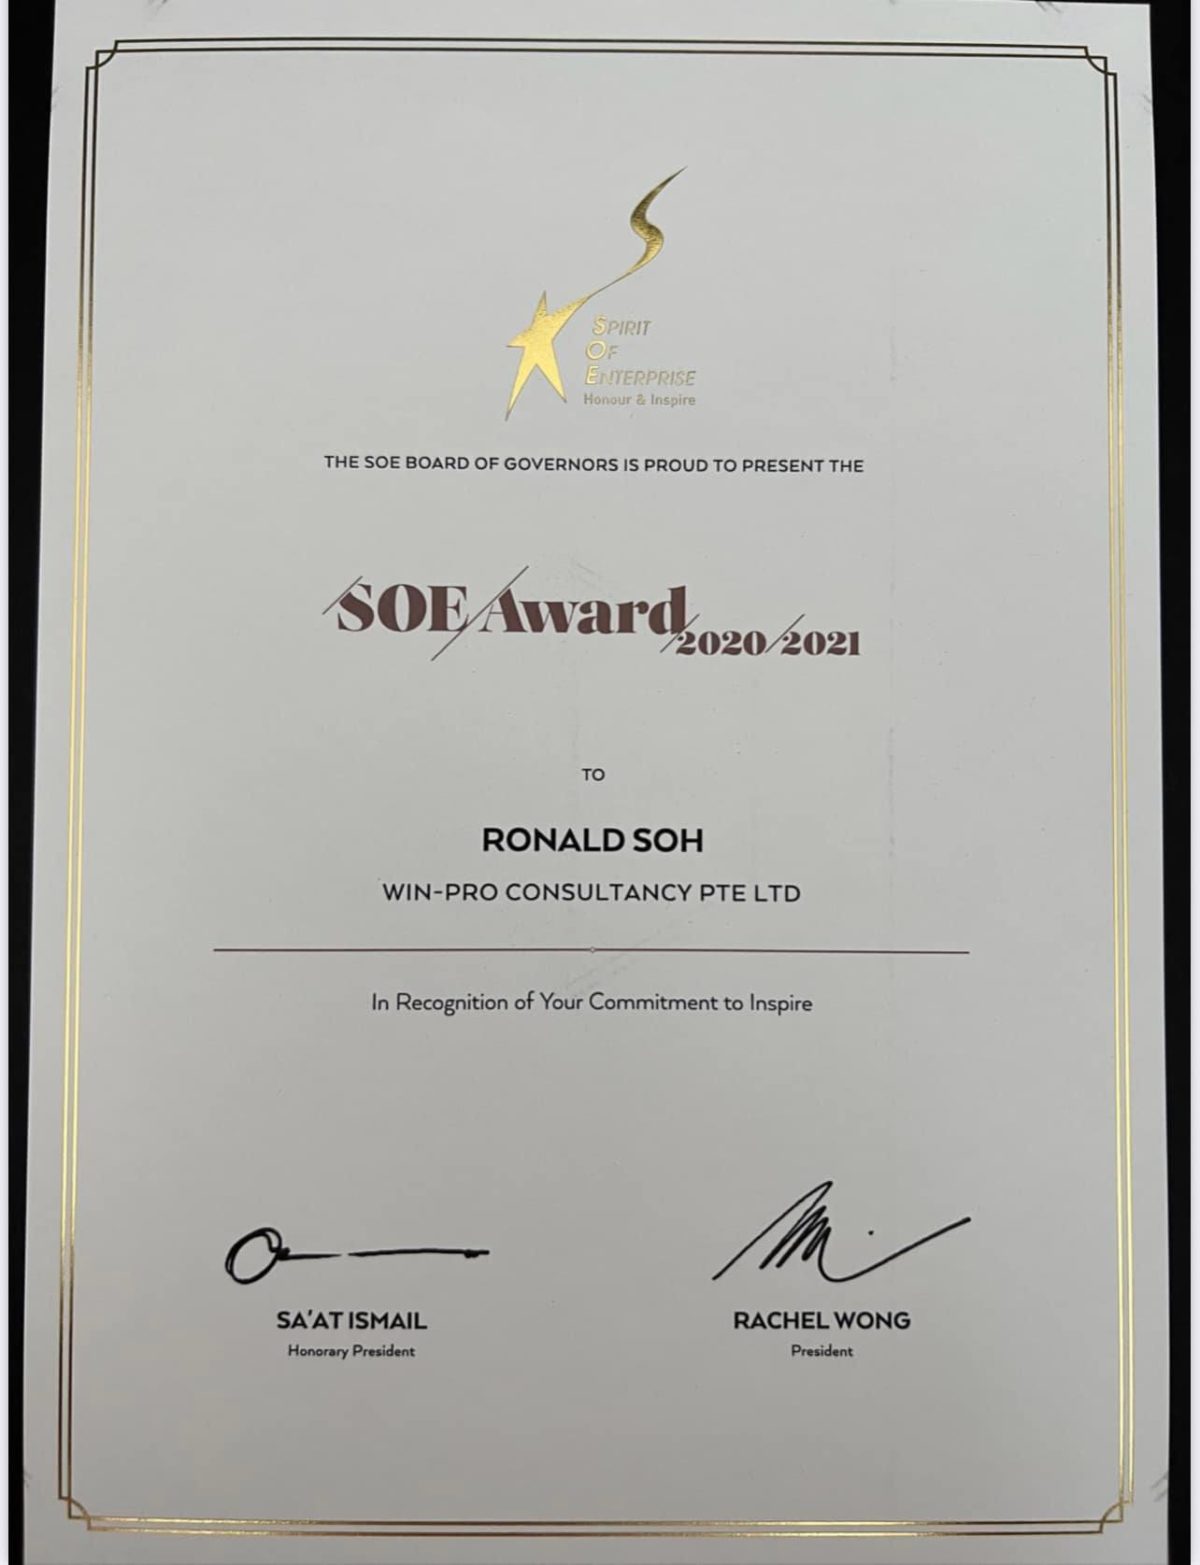 soe award 2020-2021 certificate